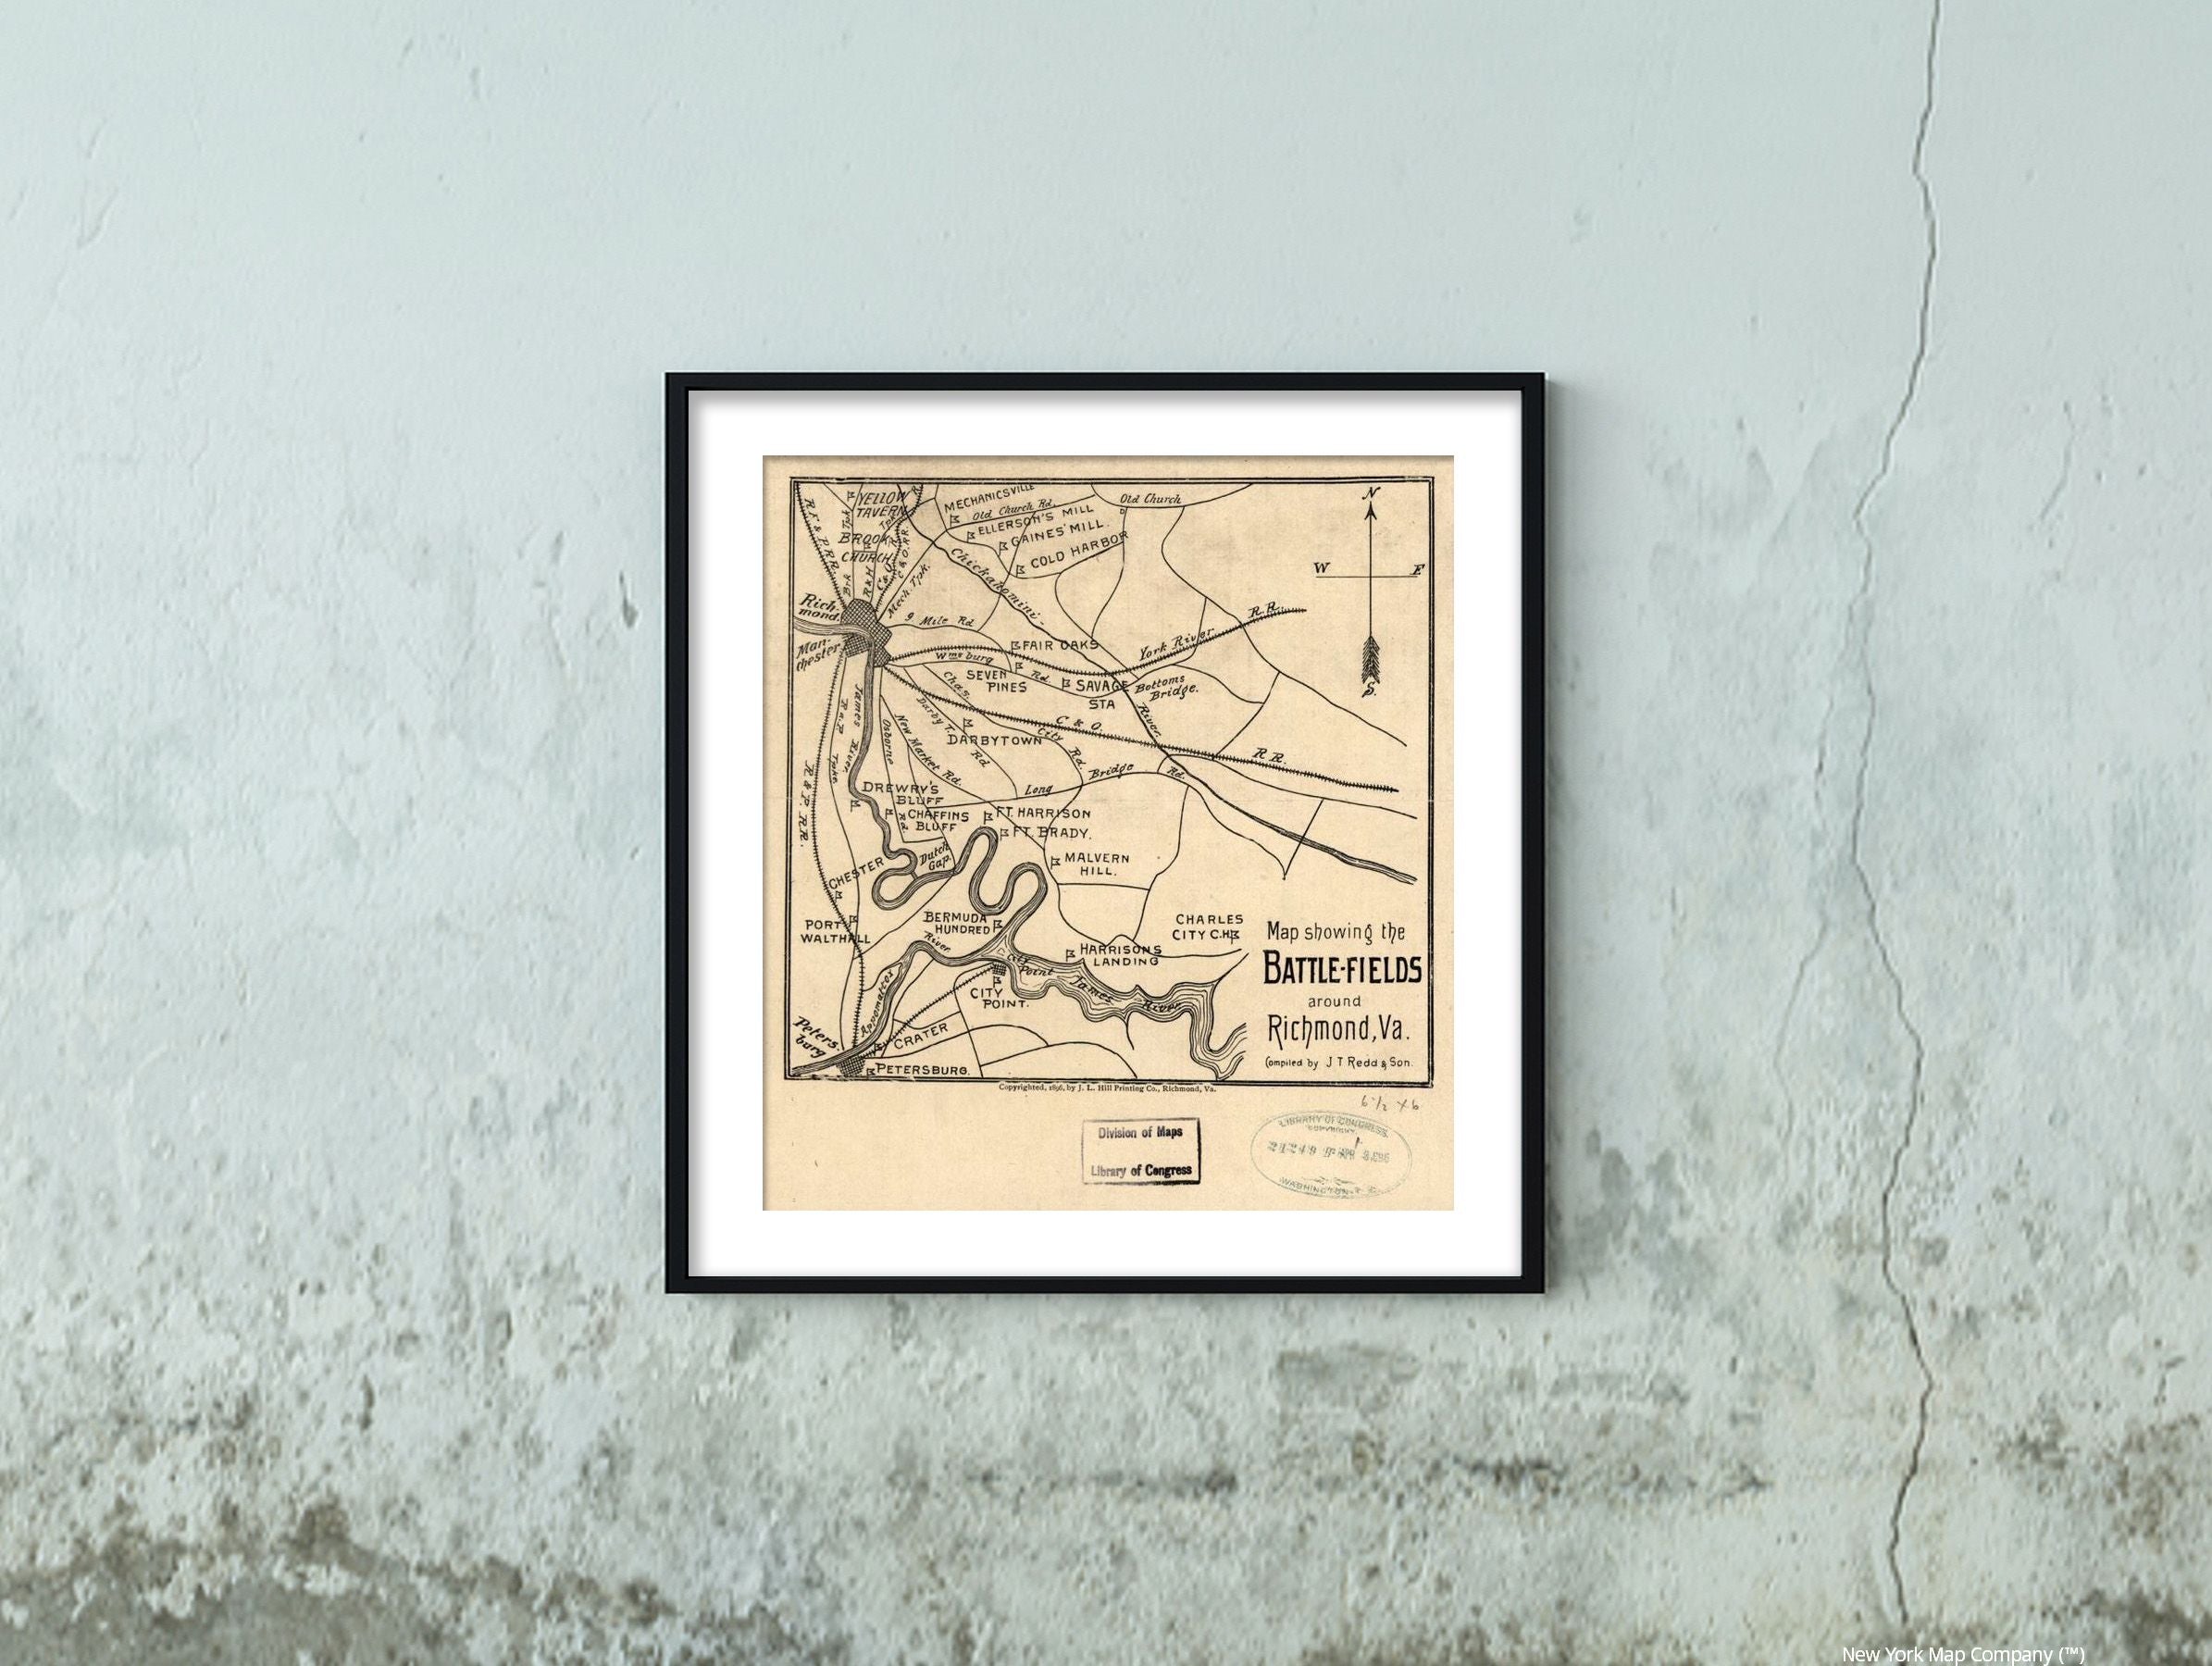 1896 Map showing the battle-fields around Richmond, Va | Battlefields | Civil War | History | Petersburg Region | Petersburg Region Va | Richmond Region | Richmond Region Va | Virginia Scale not given.